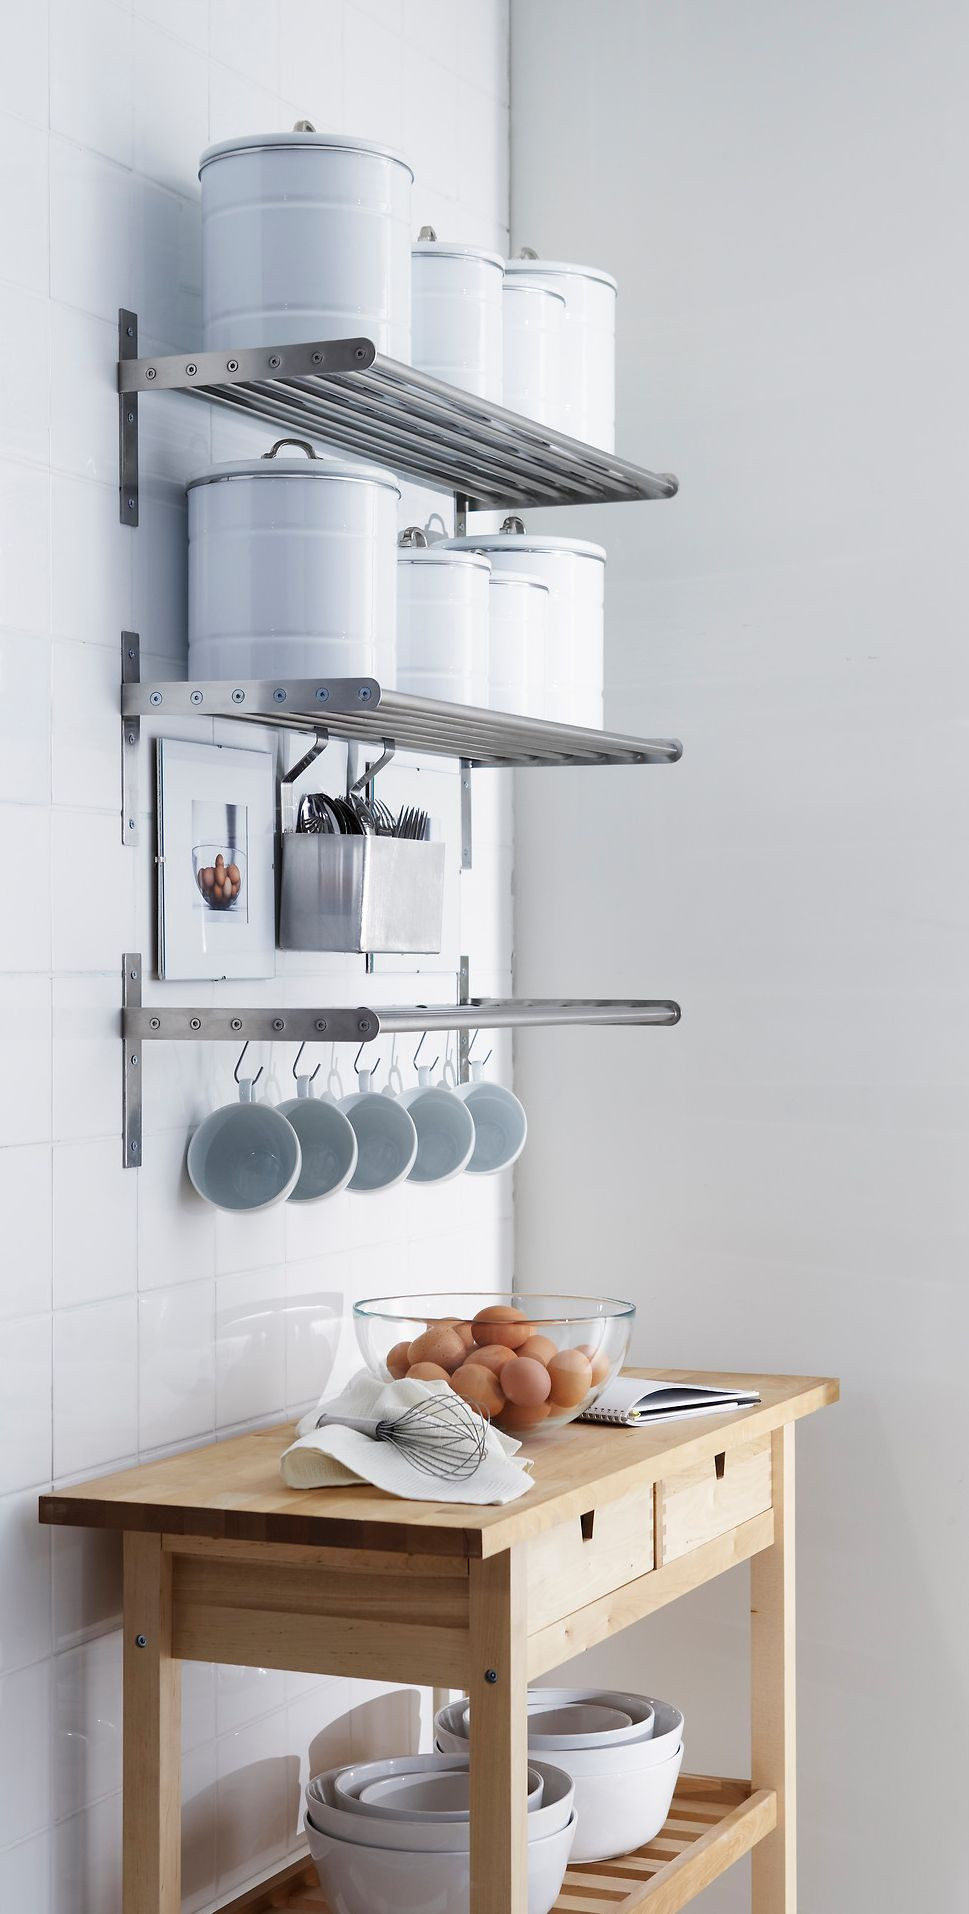 Ikea Kitchen Storage Ideas
 65 Ingenious Kitchen Organization Tips And Storage Ideas